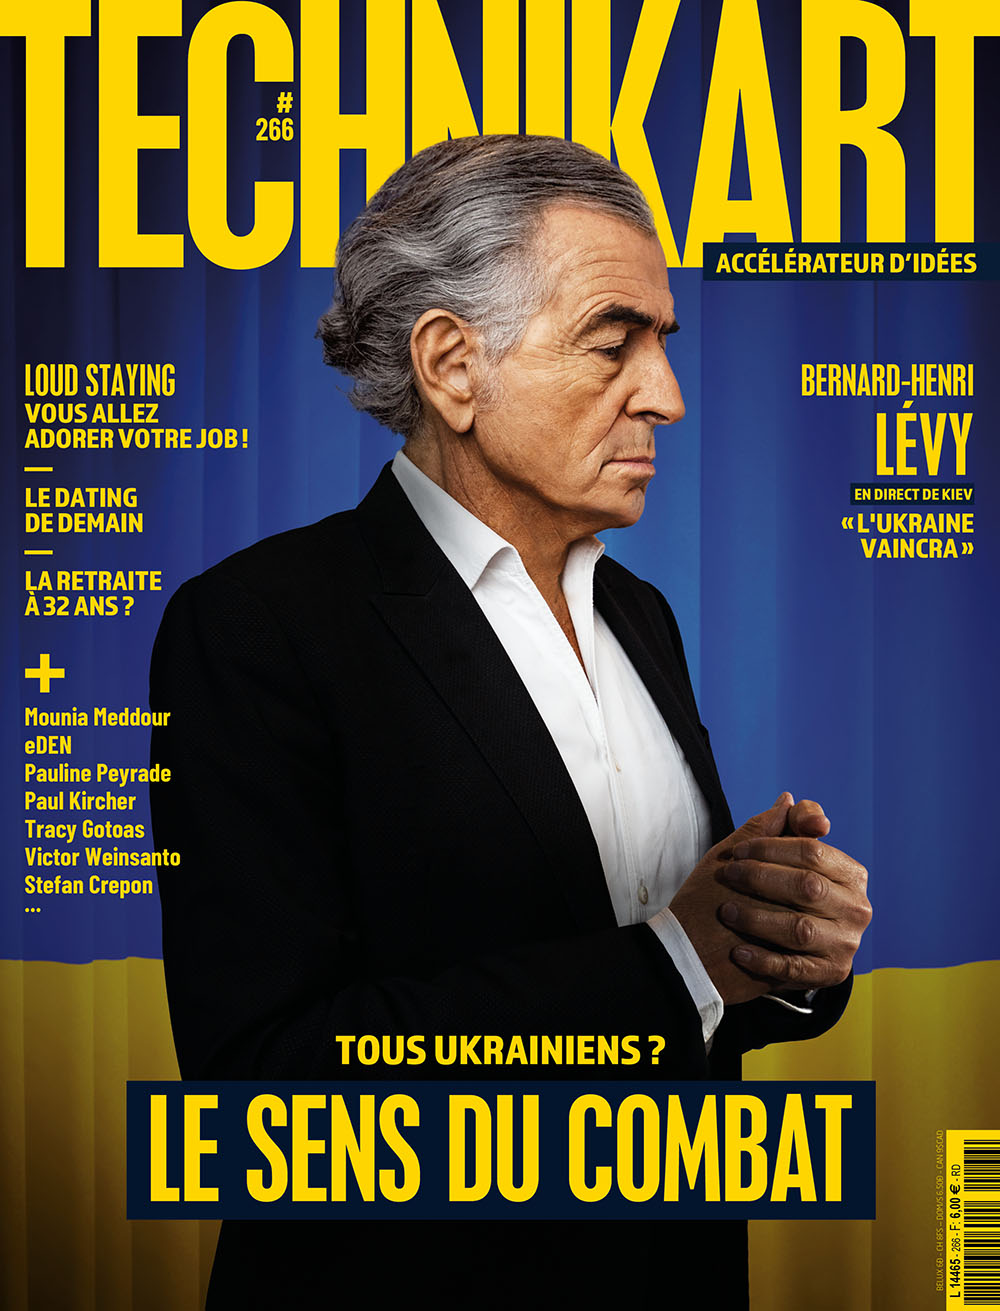 Couverture du n°266 du magazine « Technikart » avec BHL.